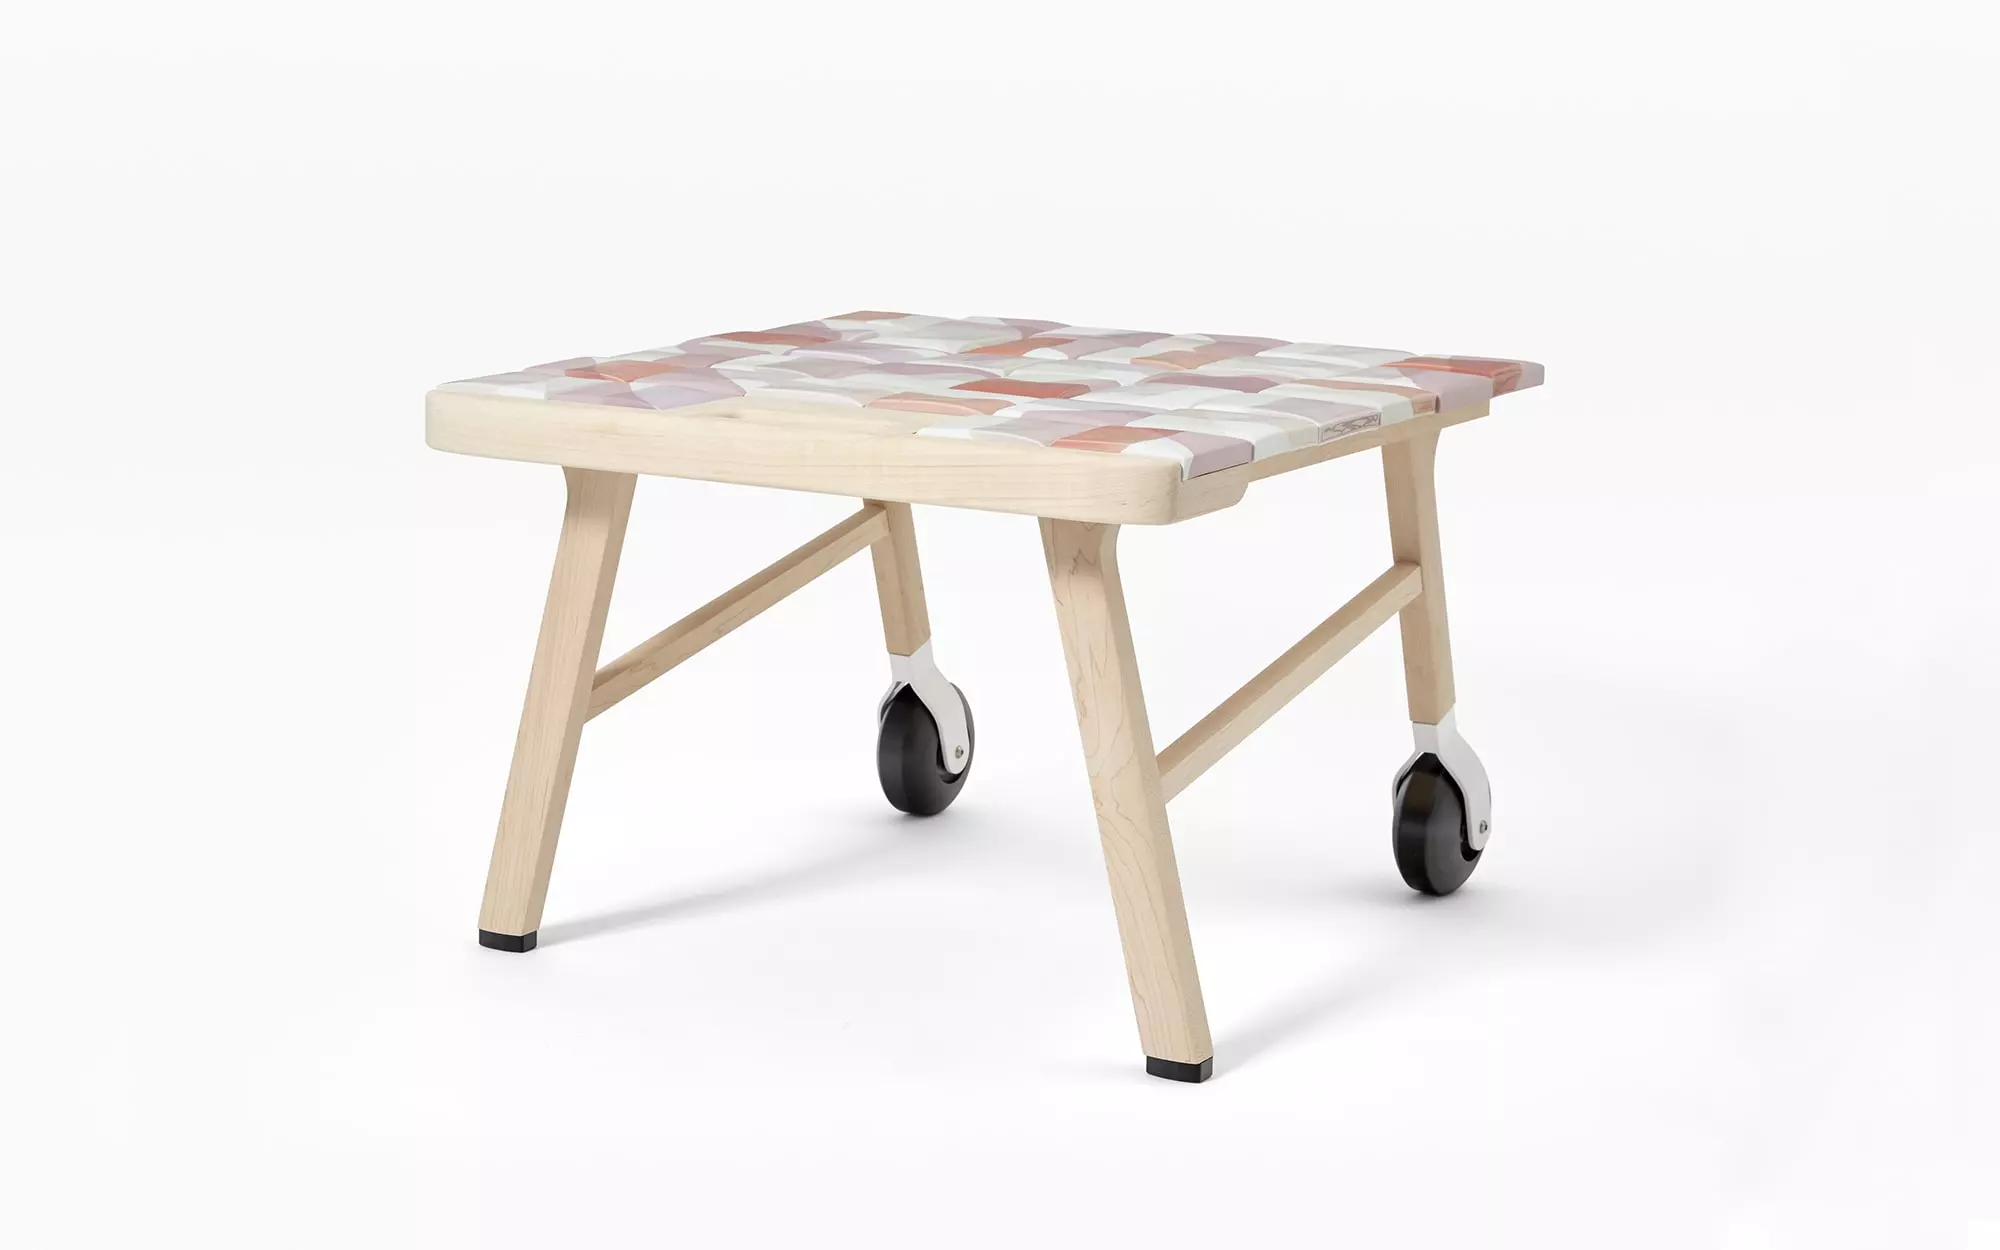 Tiles side table - Hella Jongerius - side-table - Galerie kreo